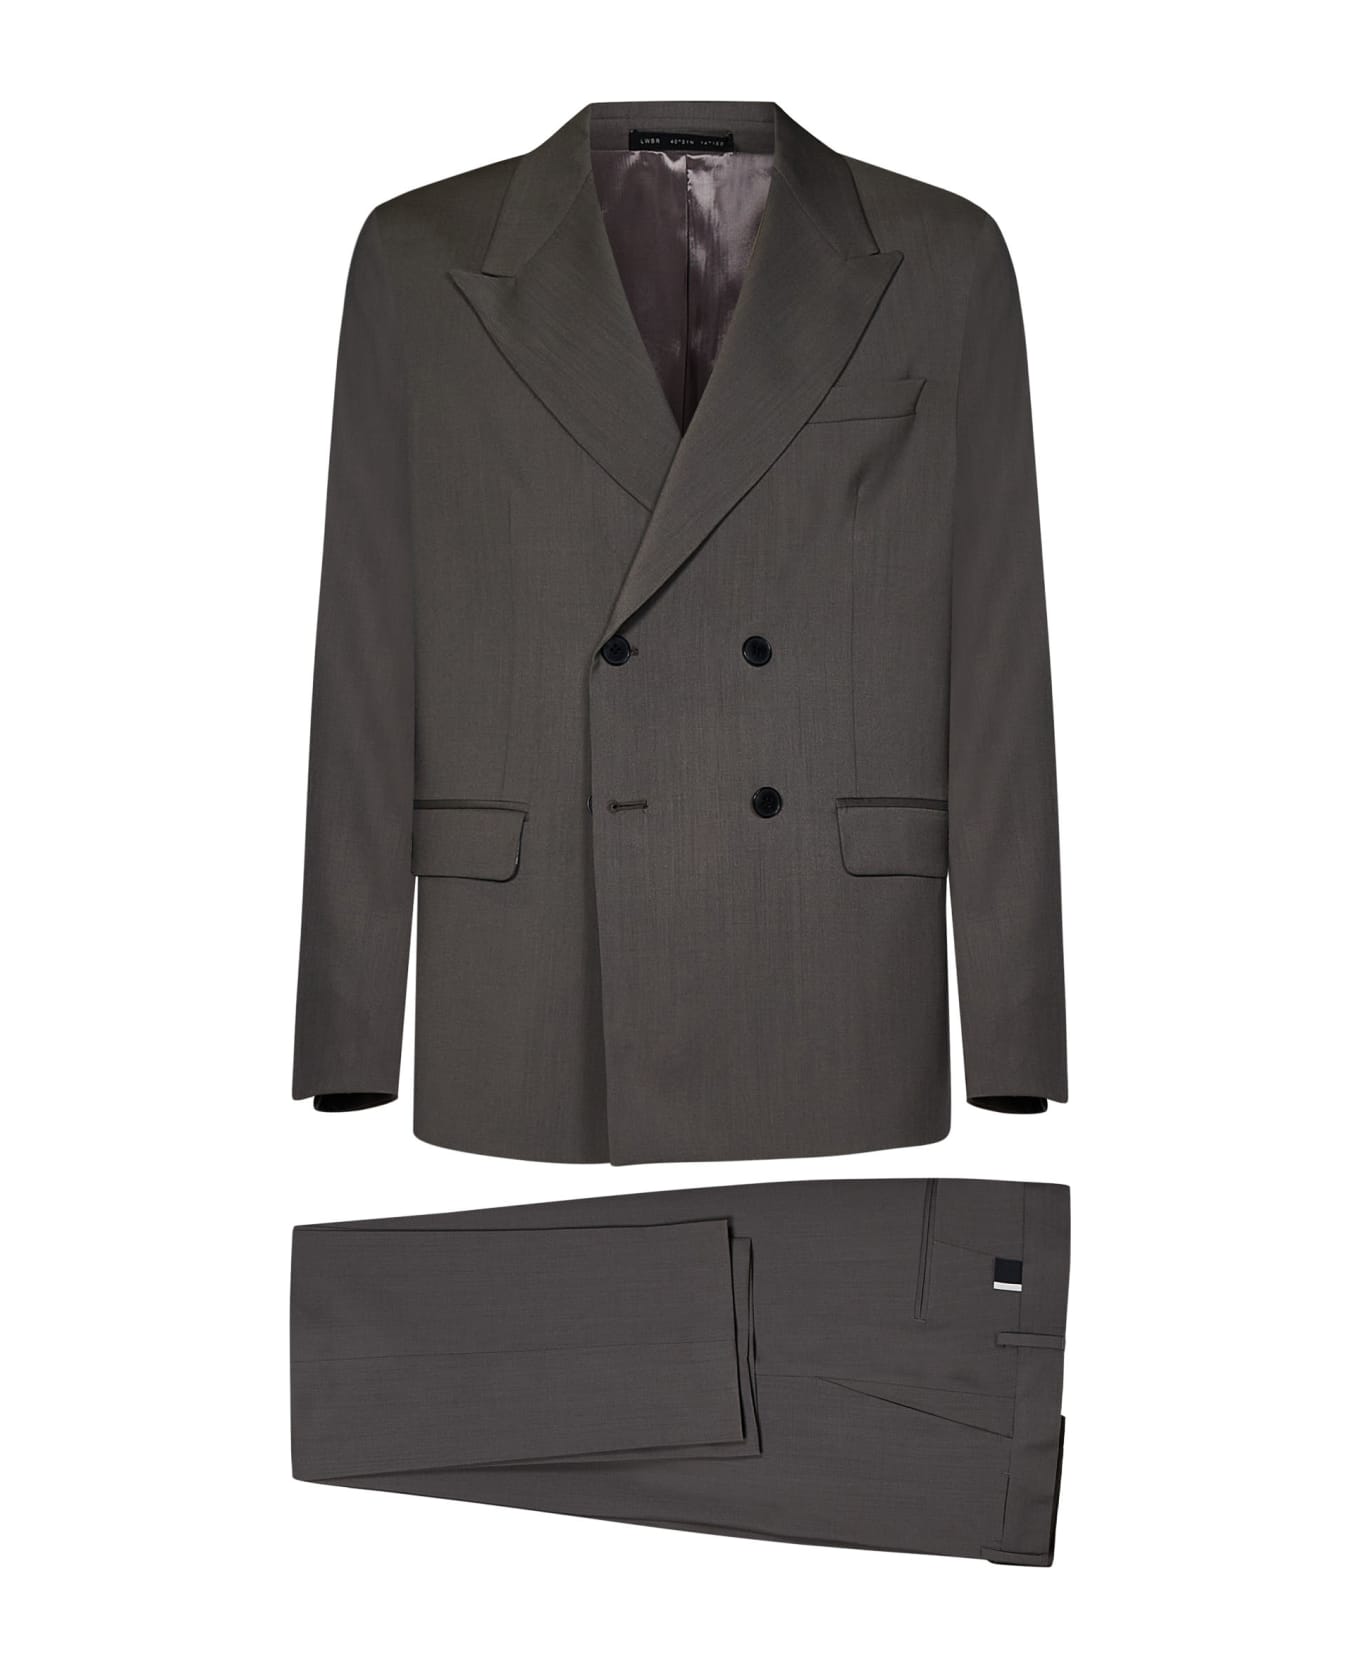 Low Brand 2b Suit - Grey スーツ